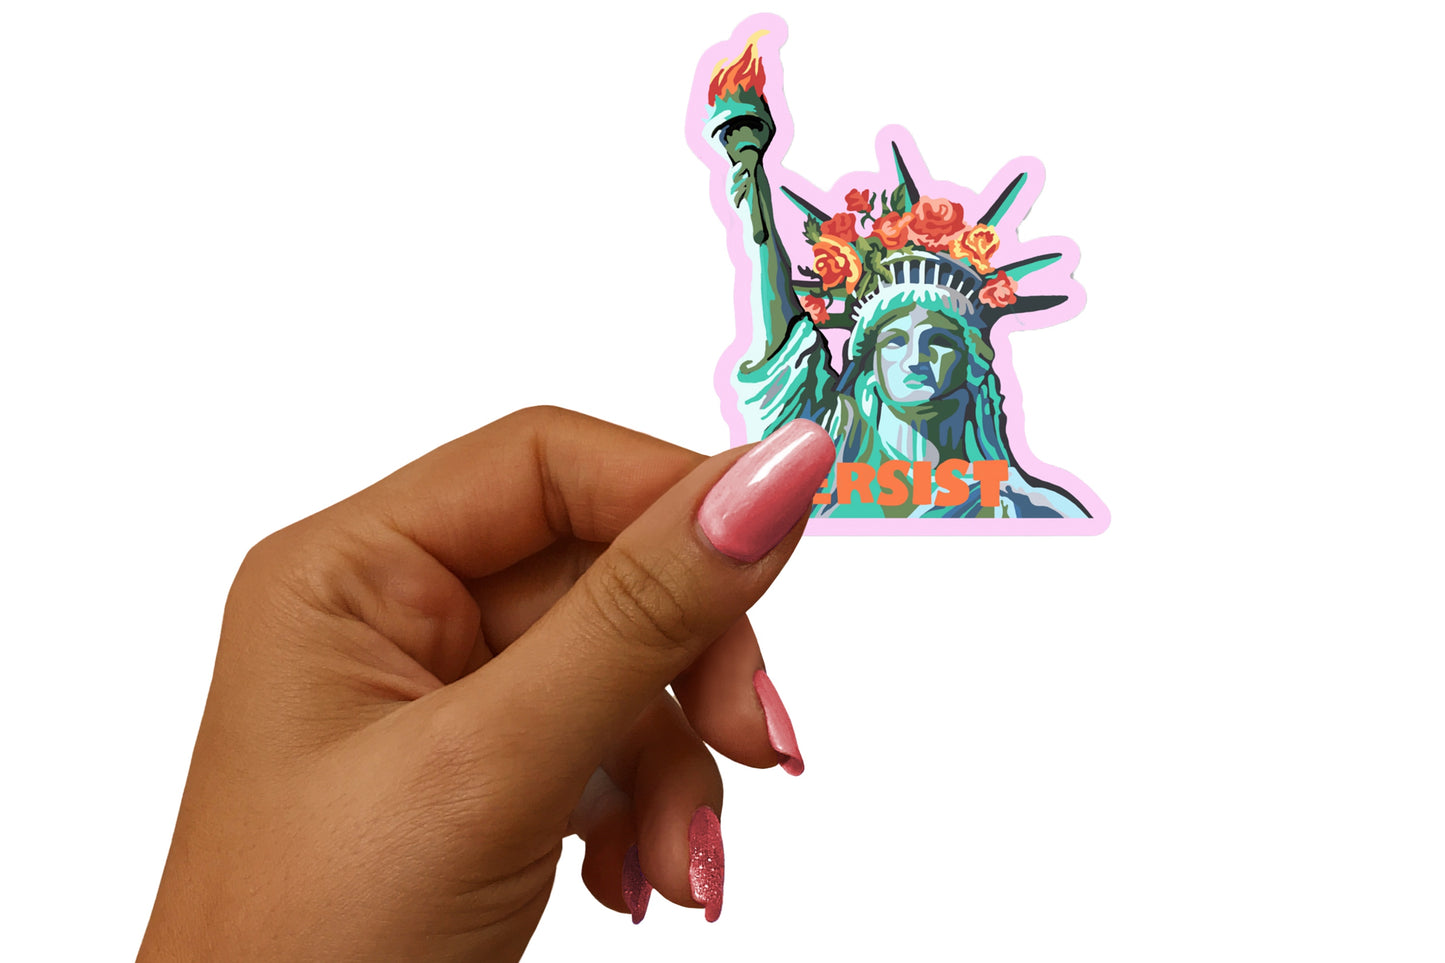 Lady Liberty ‘Persist’ Sticker; 2.75x1.75” Vinyl Decal; Free Shipping